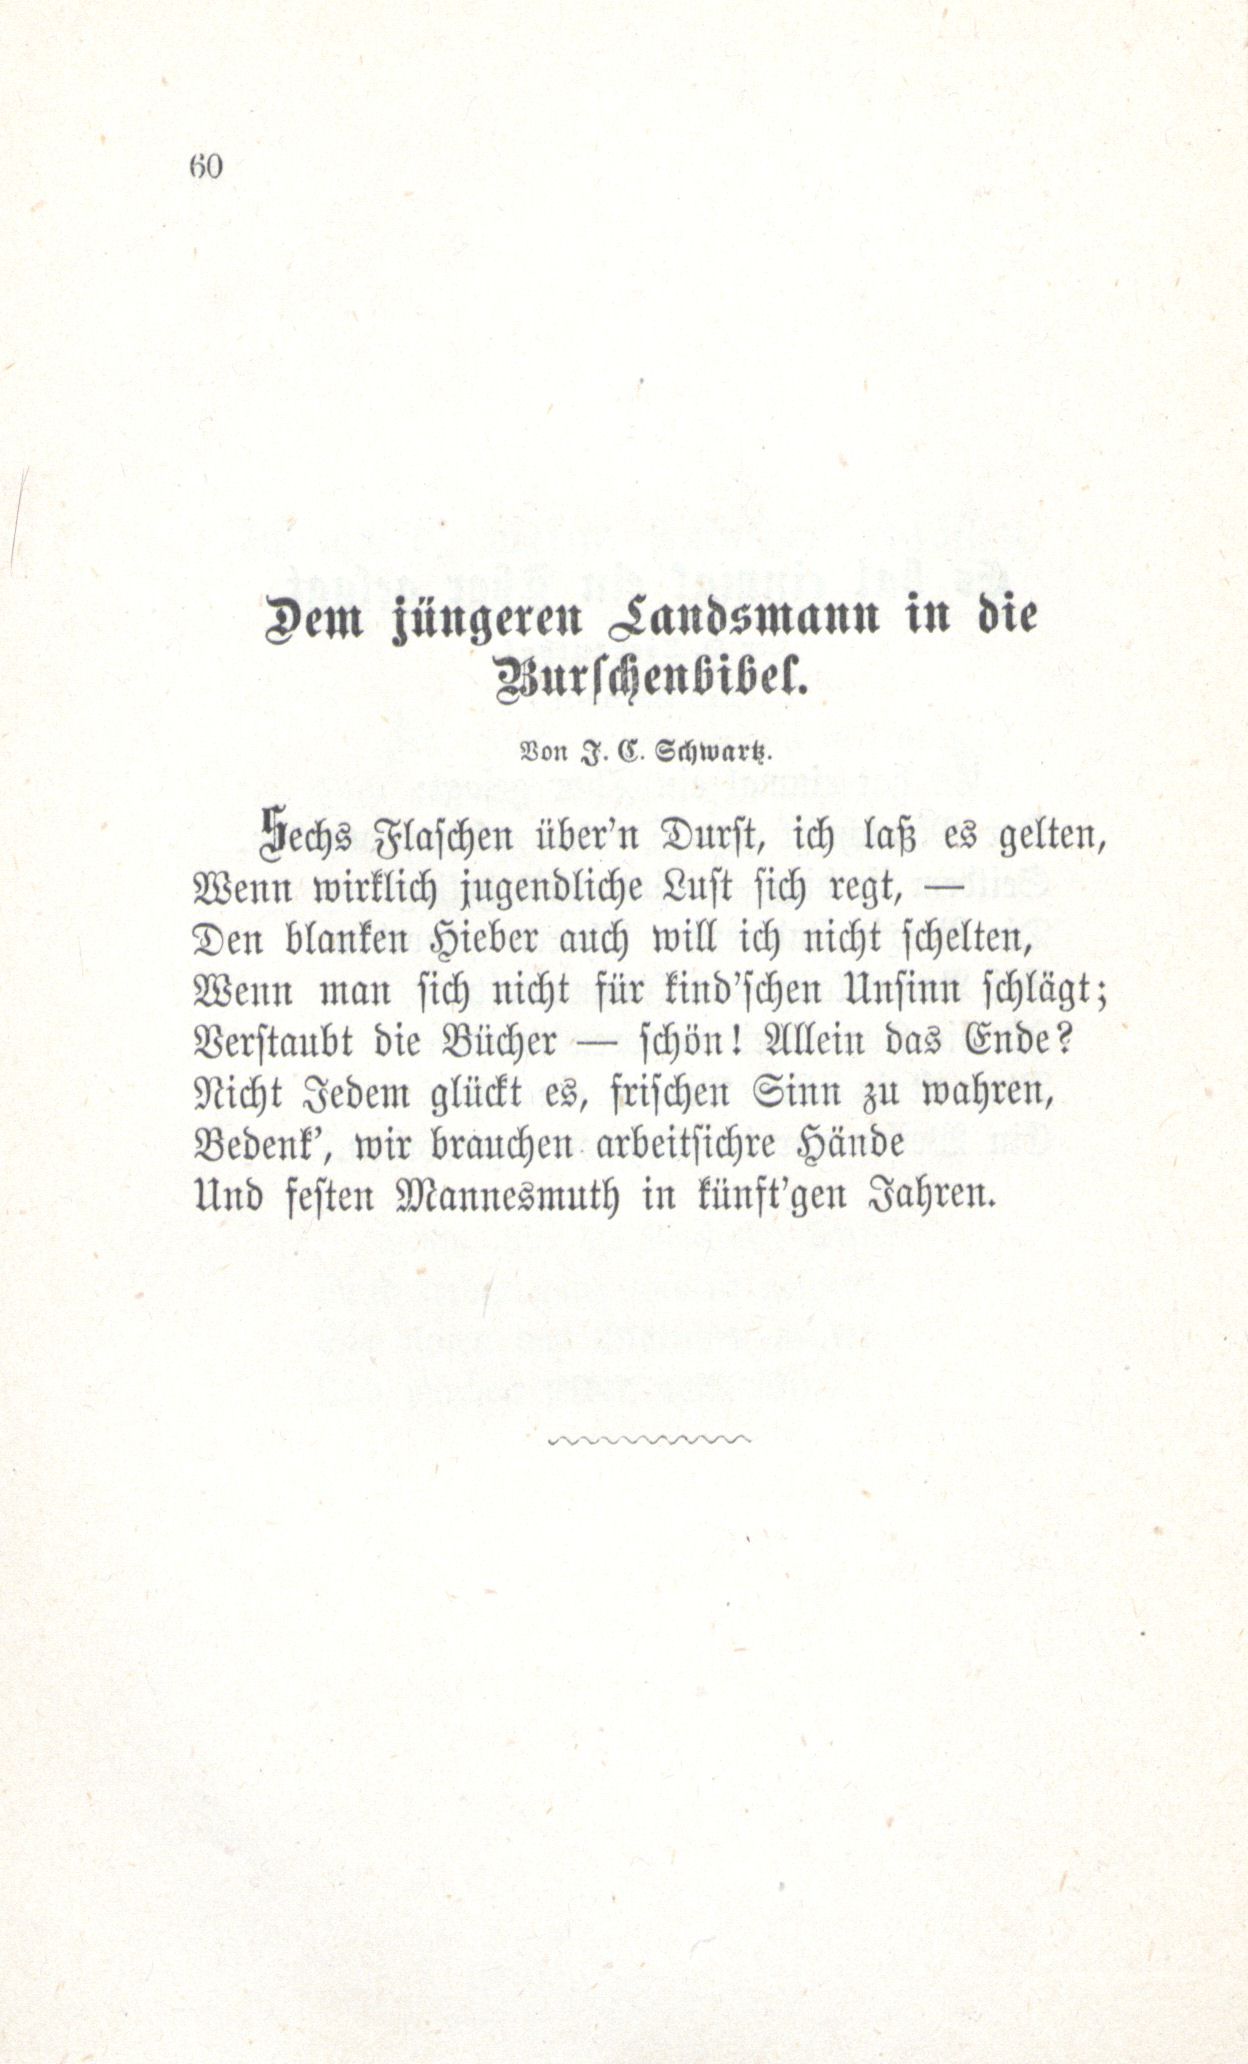 Erinnerung an die Fraternitas (1880) | 61. (60) Main body of text